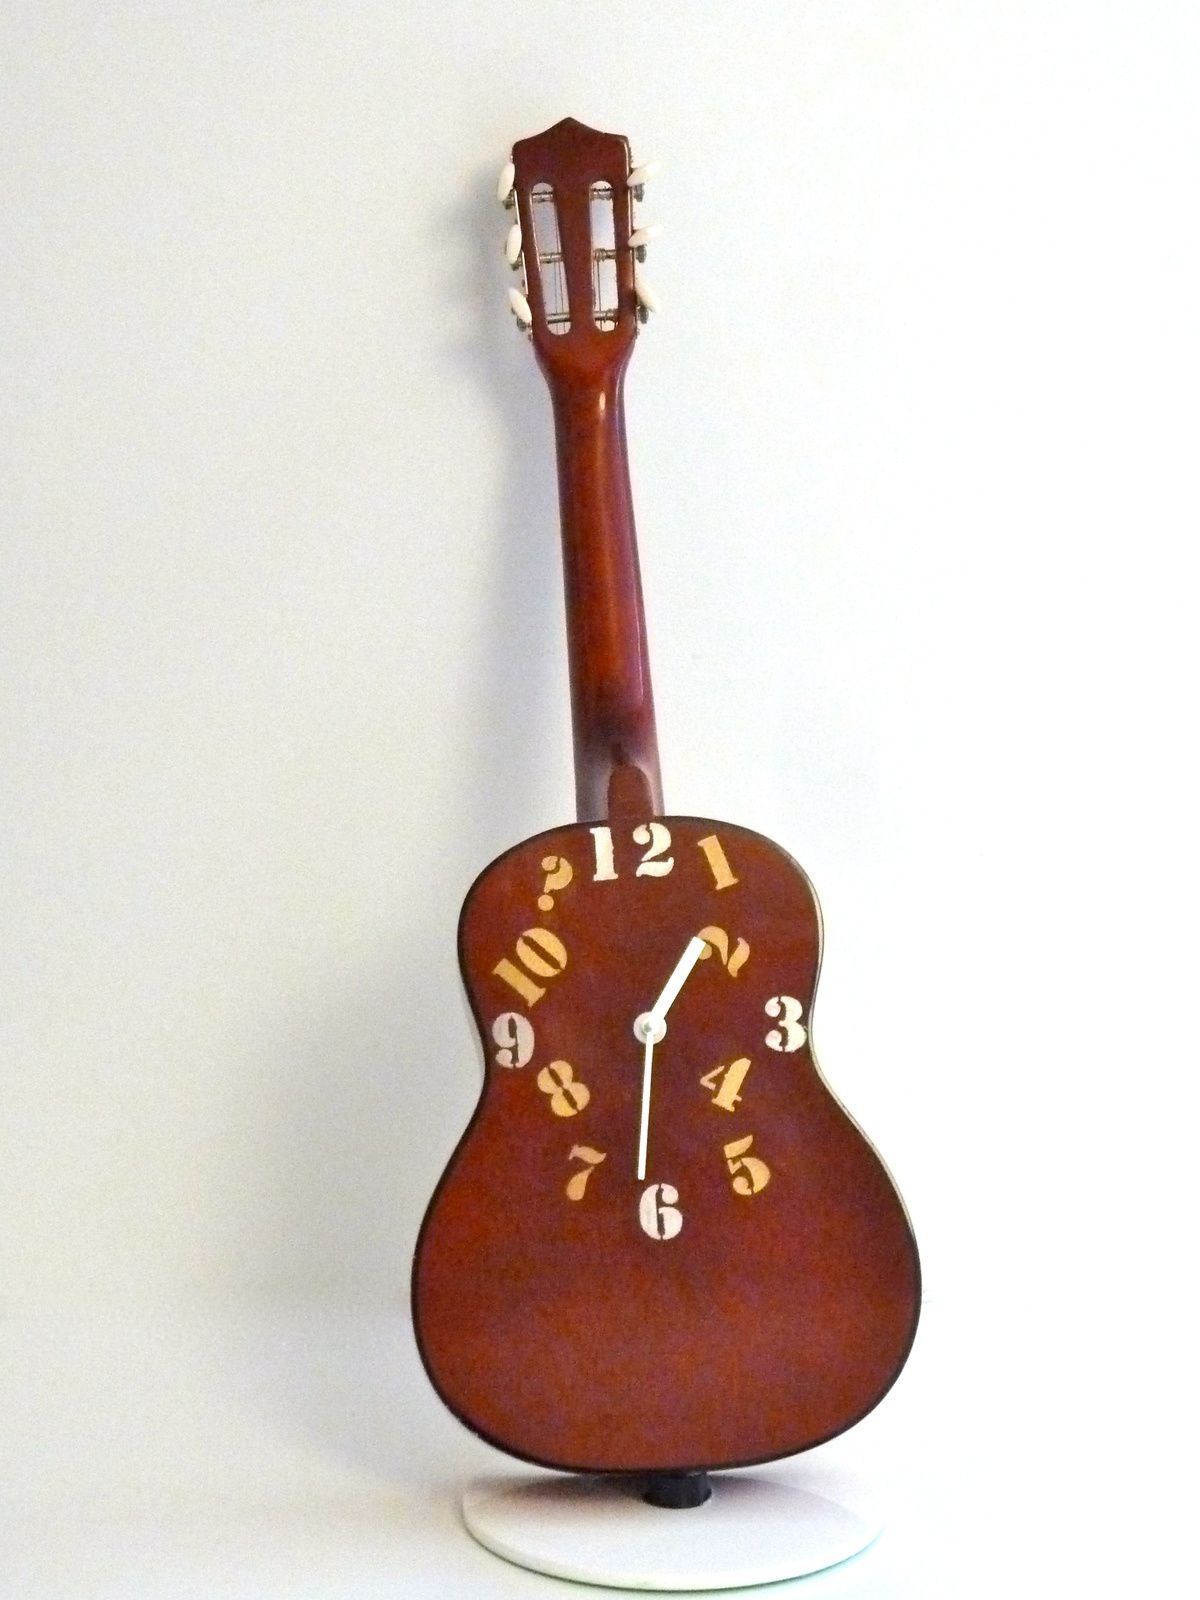 Heure en musique - Sculpture Guitare et Horloge